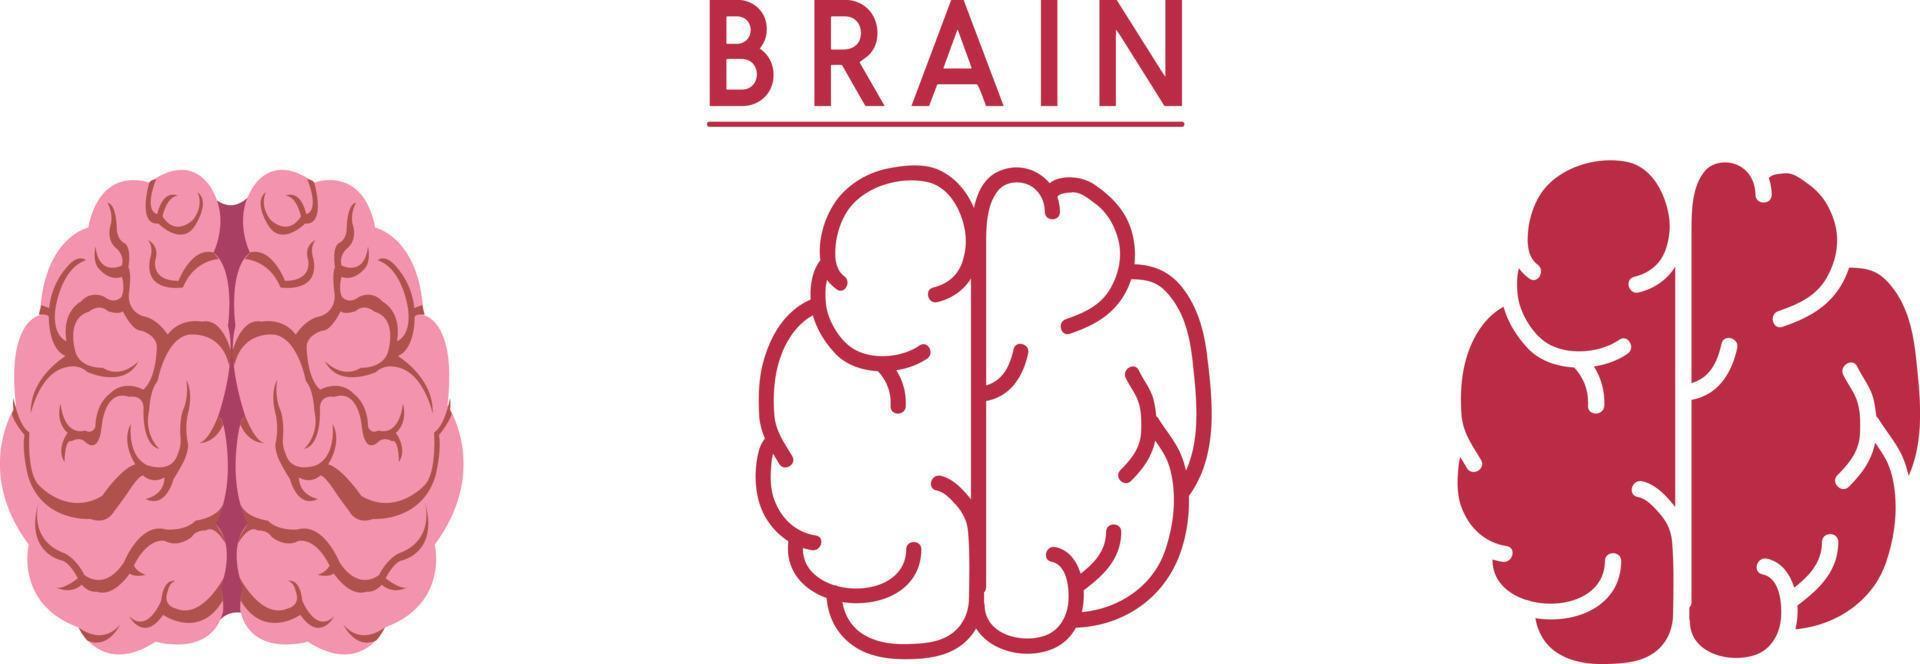 Human Brain Symbol and Icon vector